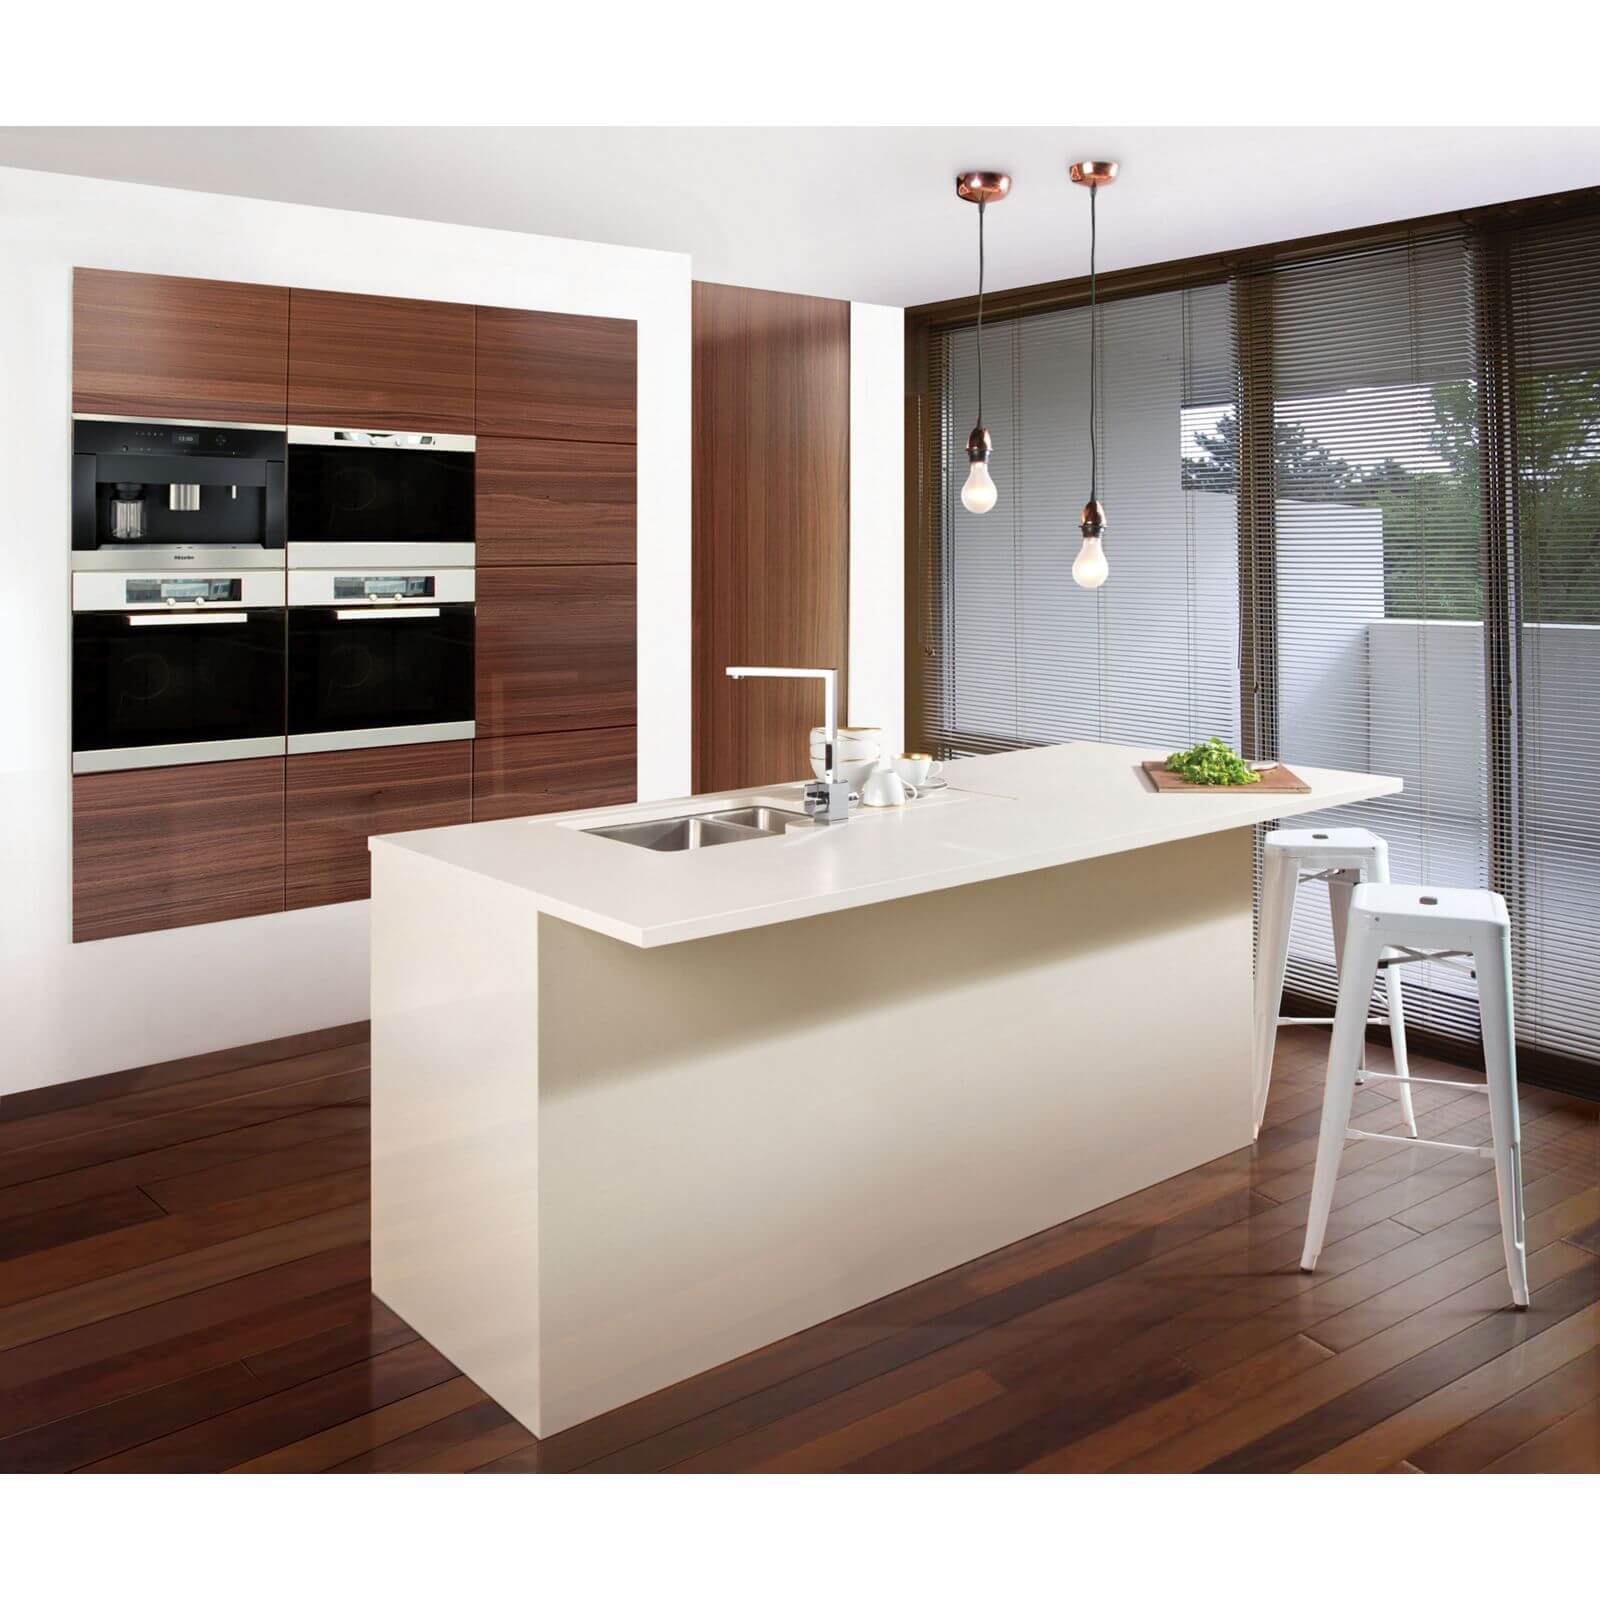 Maia Fossil Kitchen Sink Worktop - Universal Super Large Bowl - 3600 x 600 x 28mm